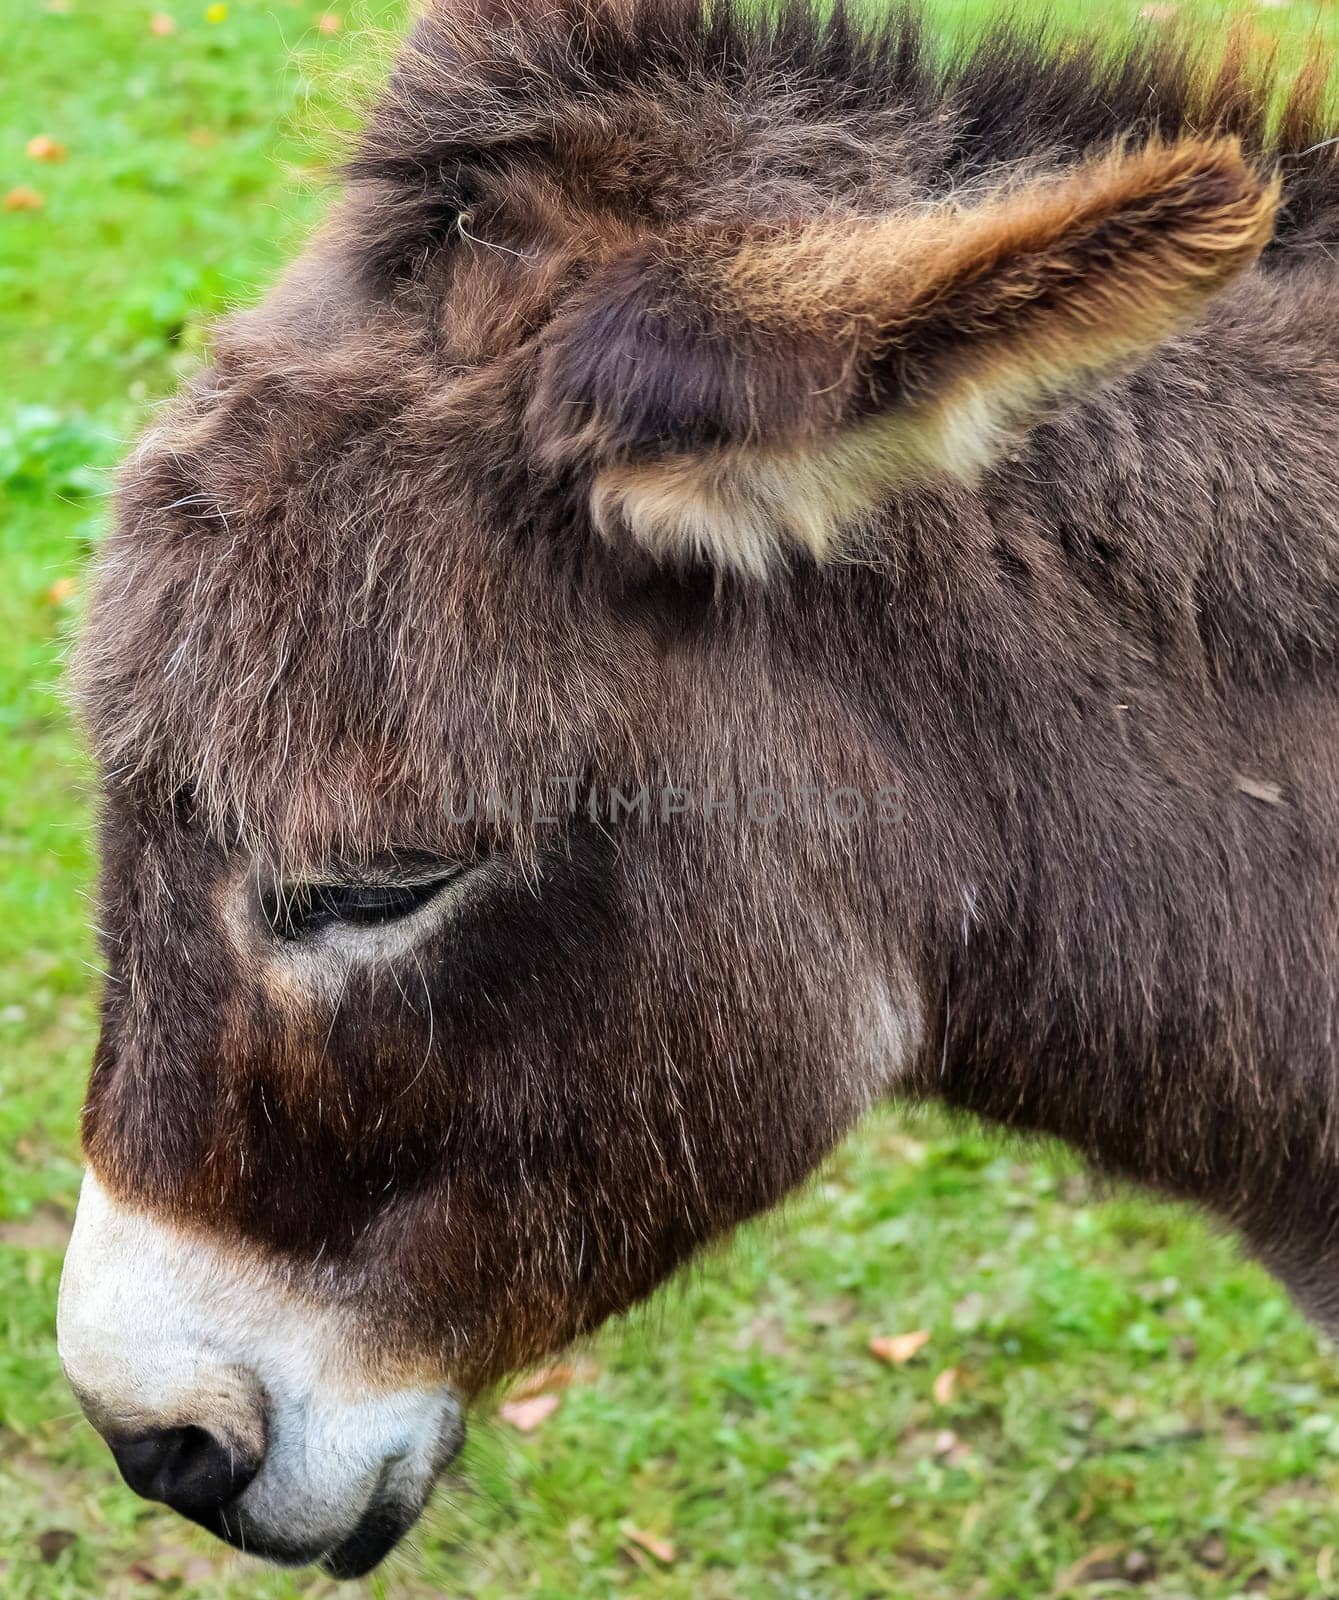 Portait of a donkey on a green field